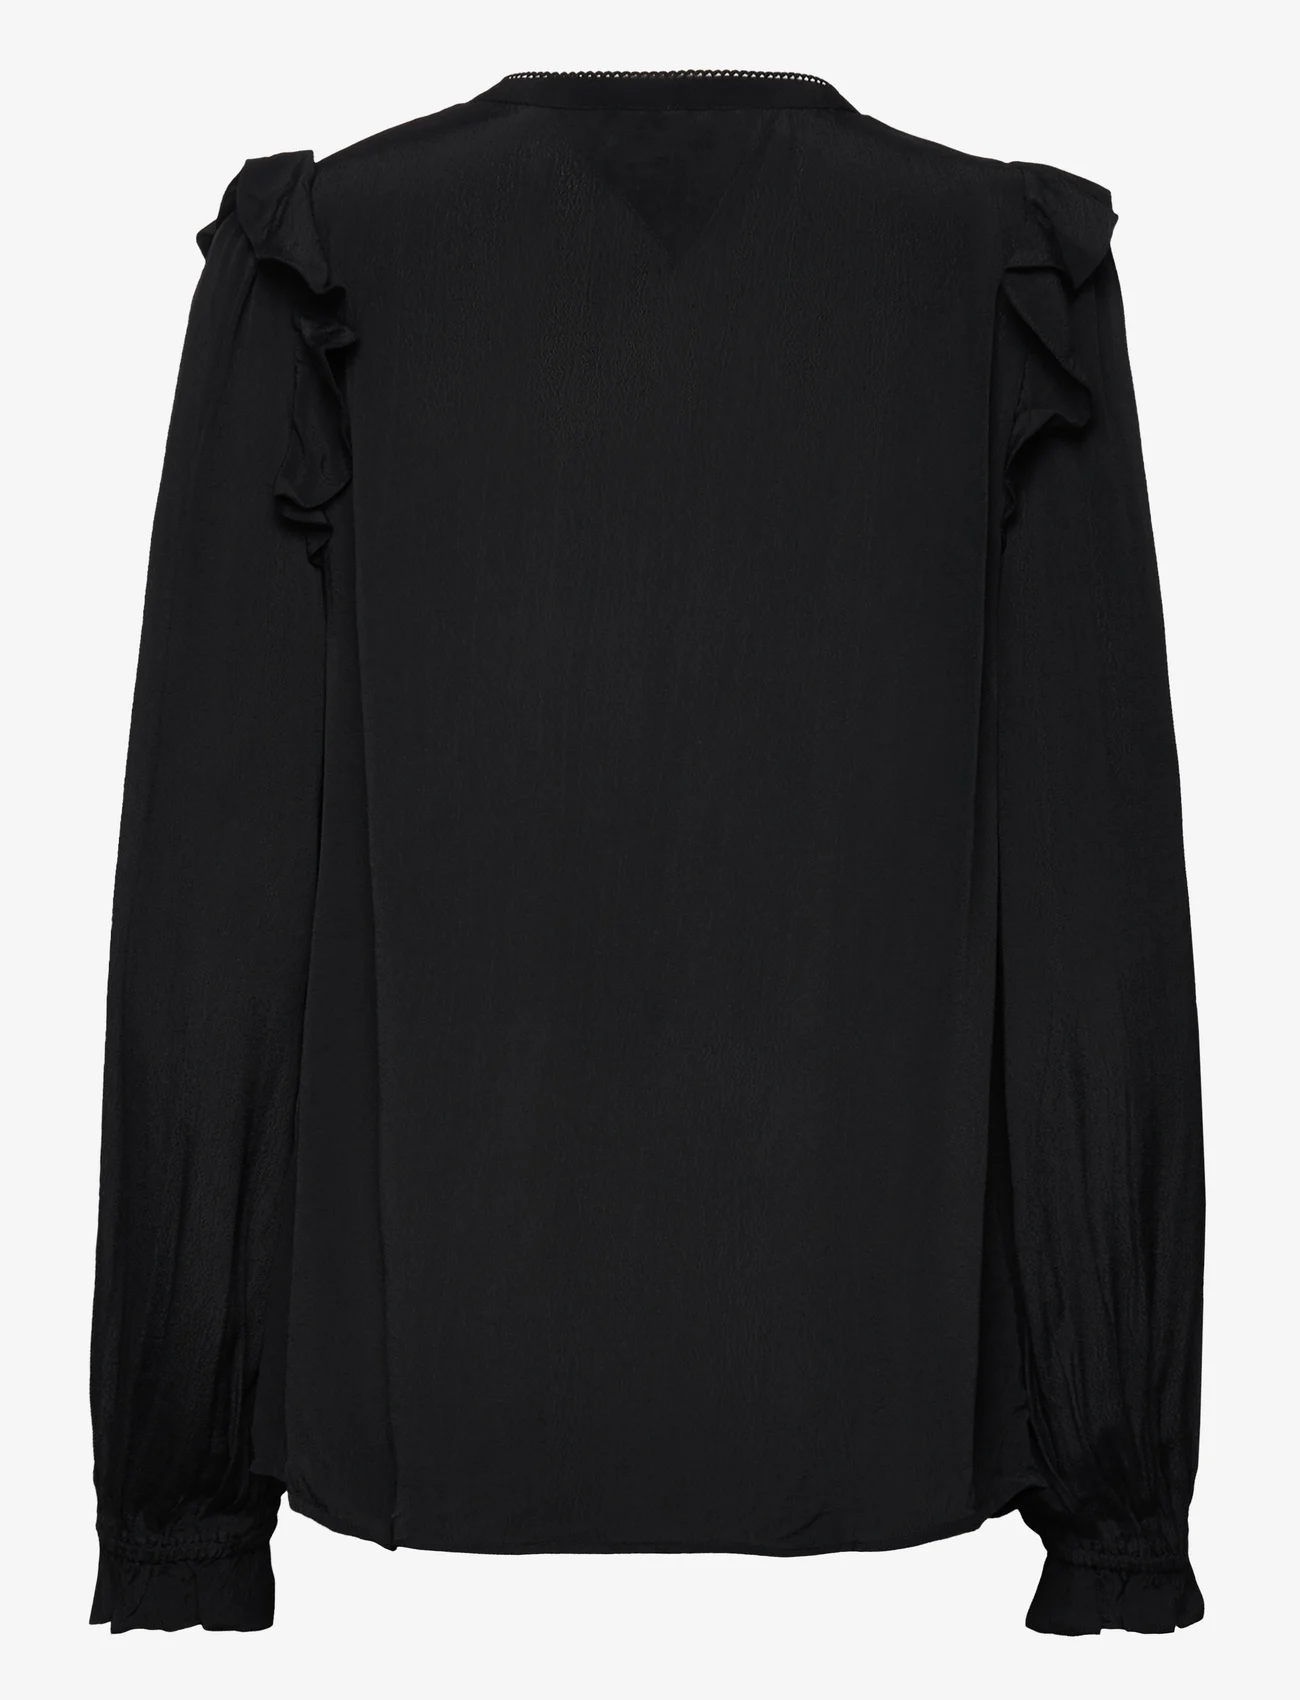 Tommy Hilfiger - MOSS CREPE SOLID BLOUSE LS - long-sleeved blouses - black - 1